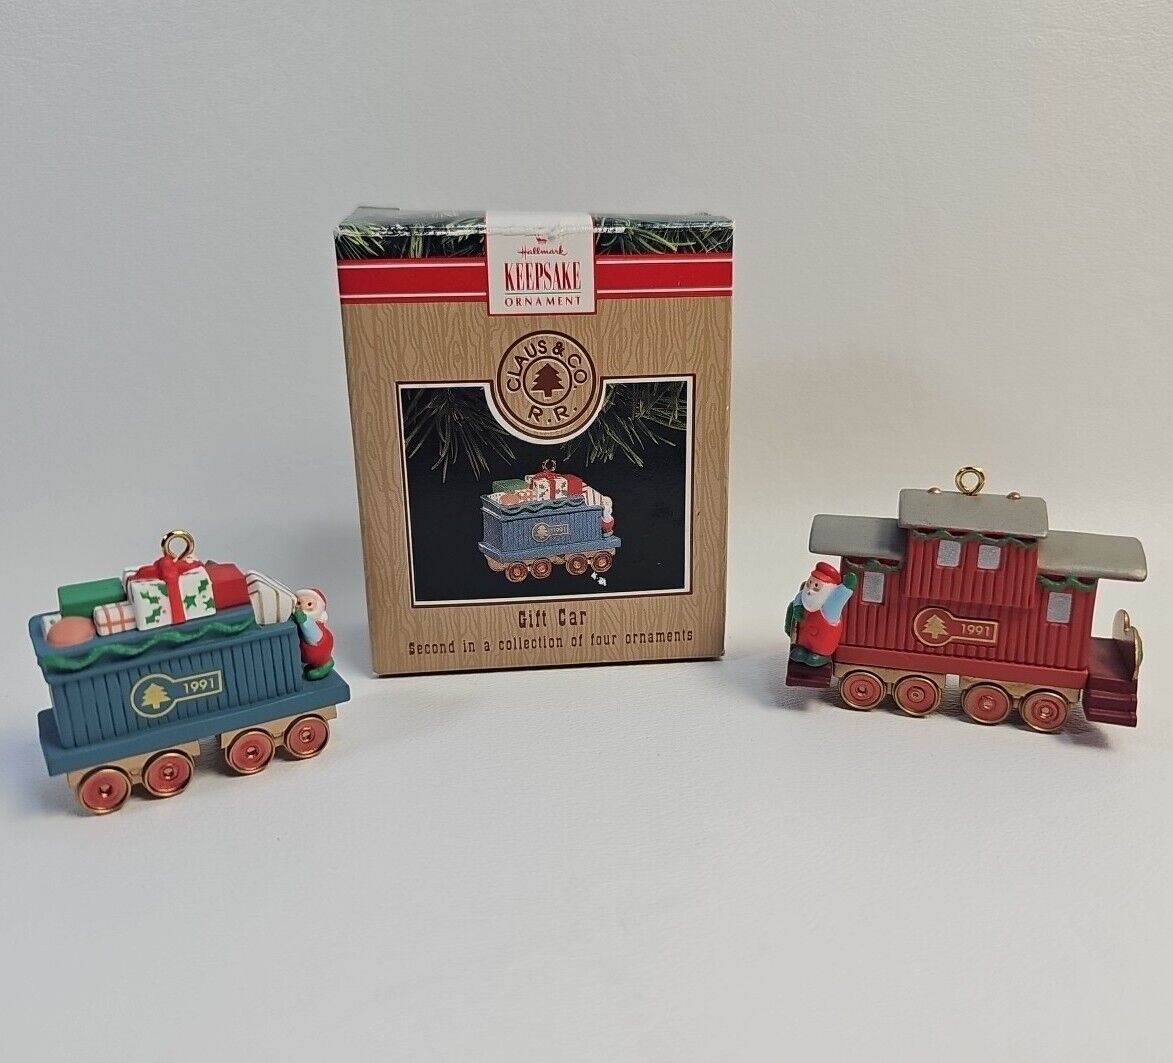 Vintage 1991 Hallmark Keepsake Ornament Claus and Co Railroad Caboose & Gift Car